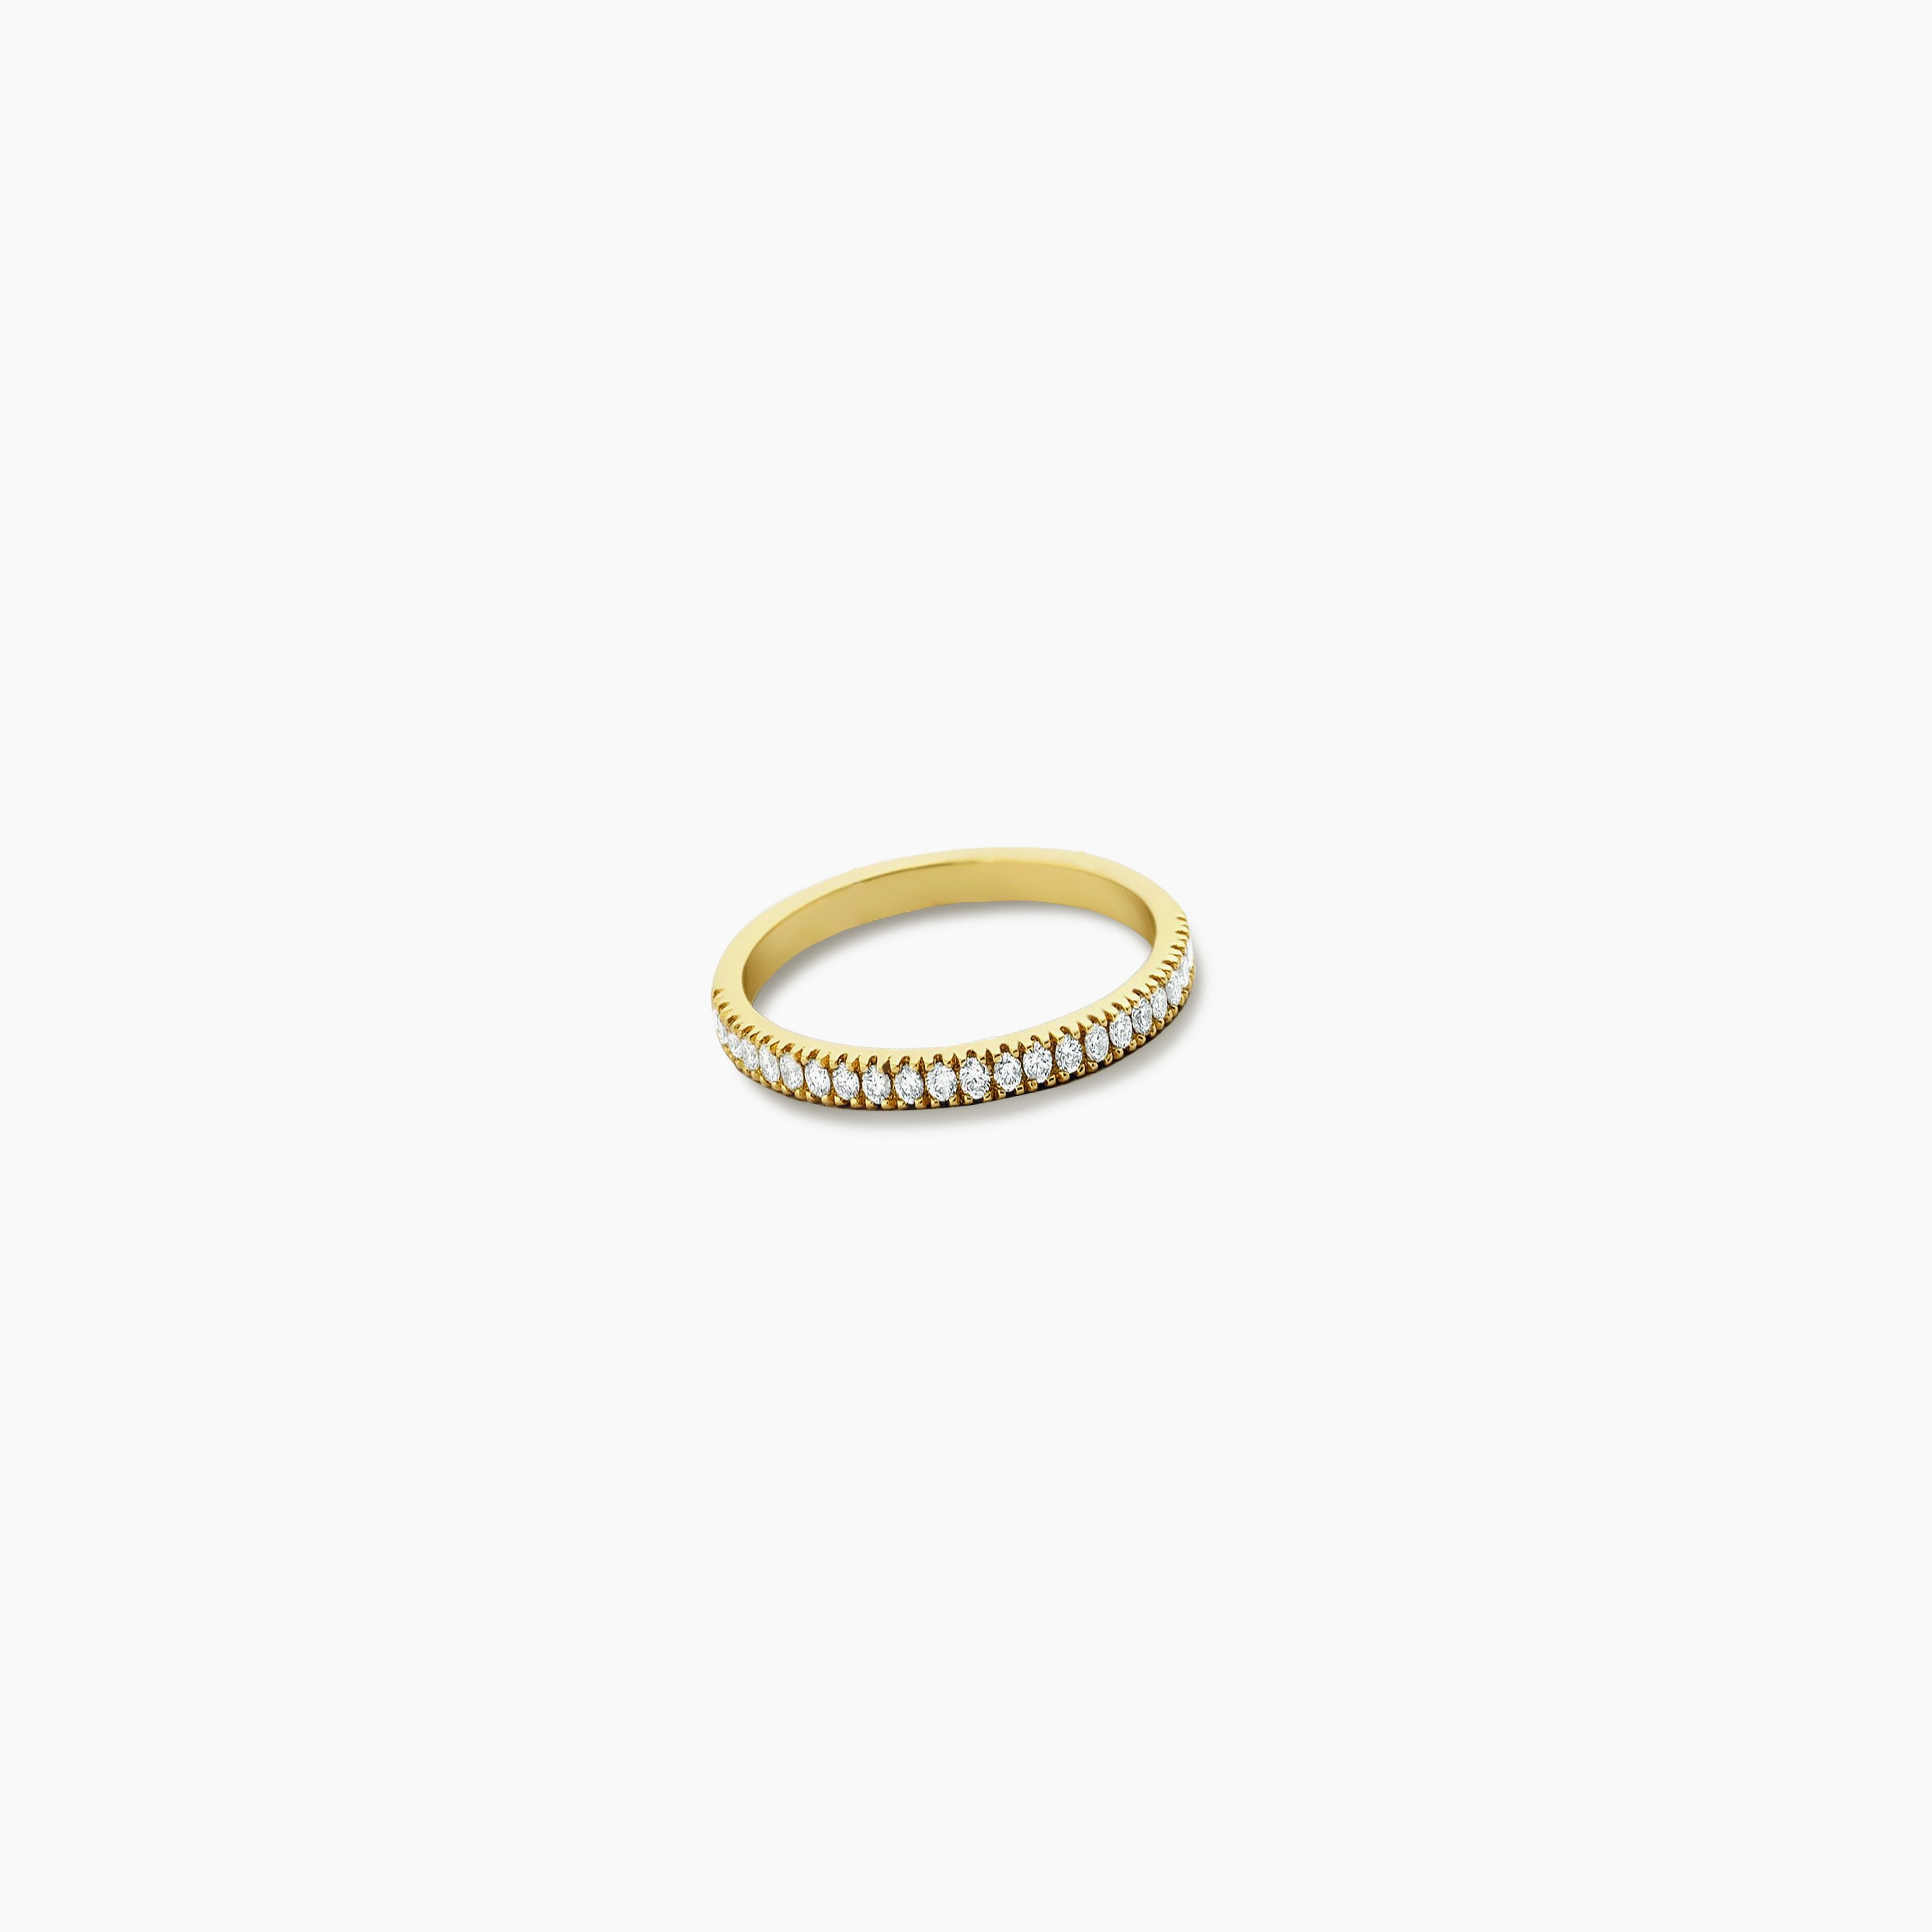 Arthur - 14K Solid Yellow Gold Ring